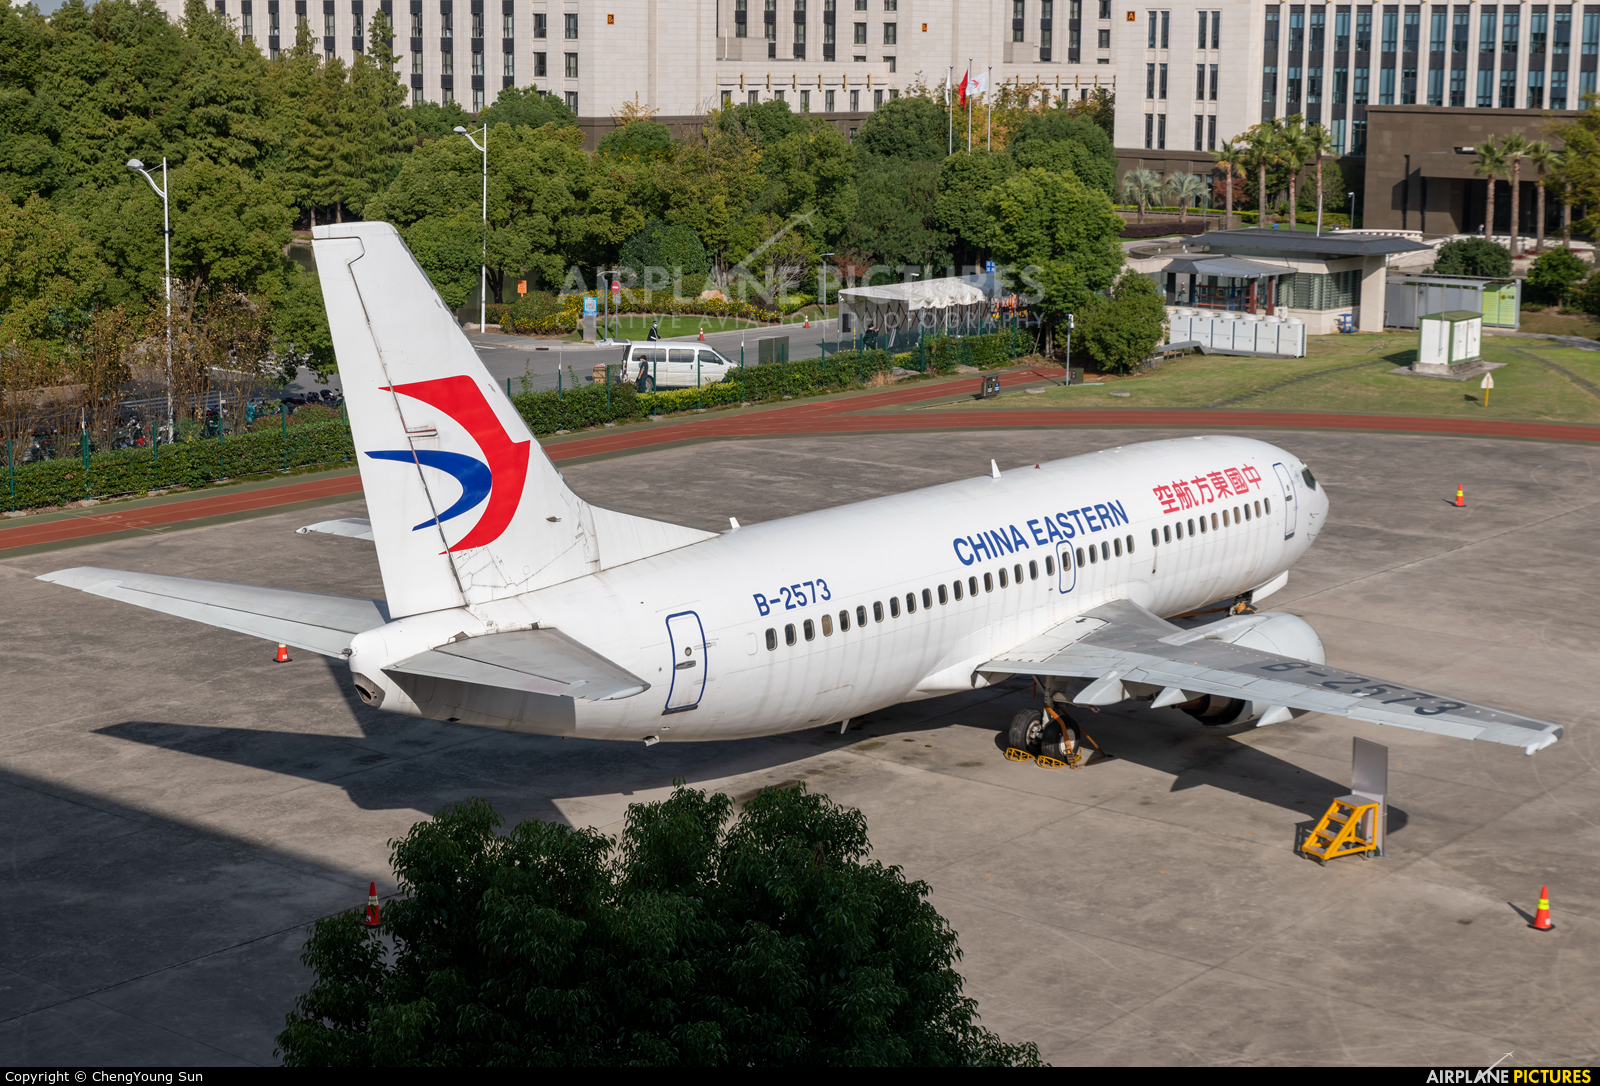 China Eastern Airlines B-2573 aircraft at Off Airport - China